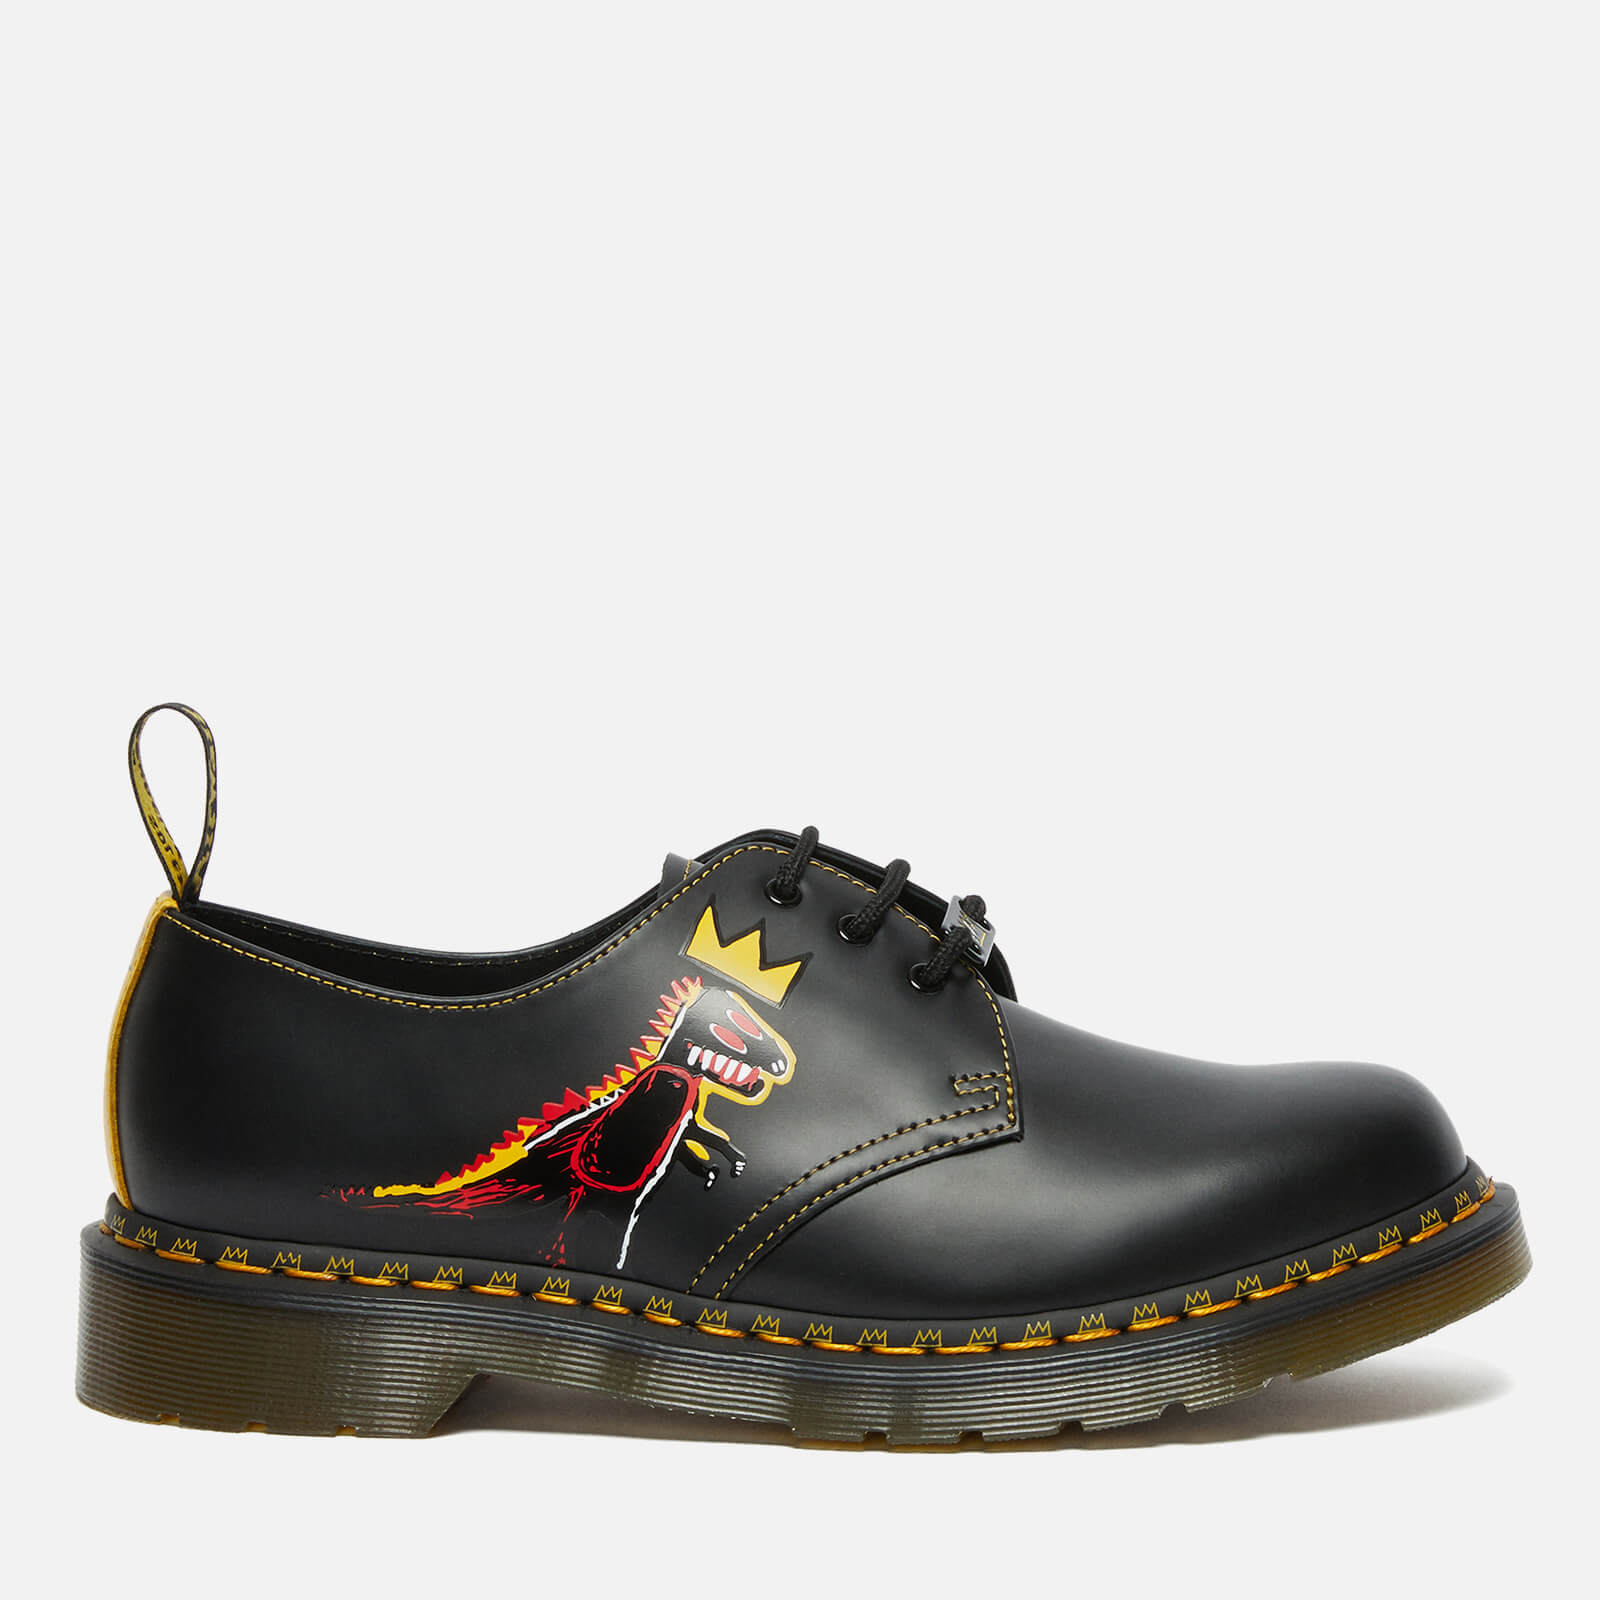 Dr. Martens X Basquiat 1461 Leather 3 Eye Shoes - Black - UK 3